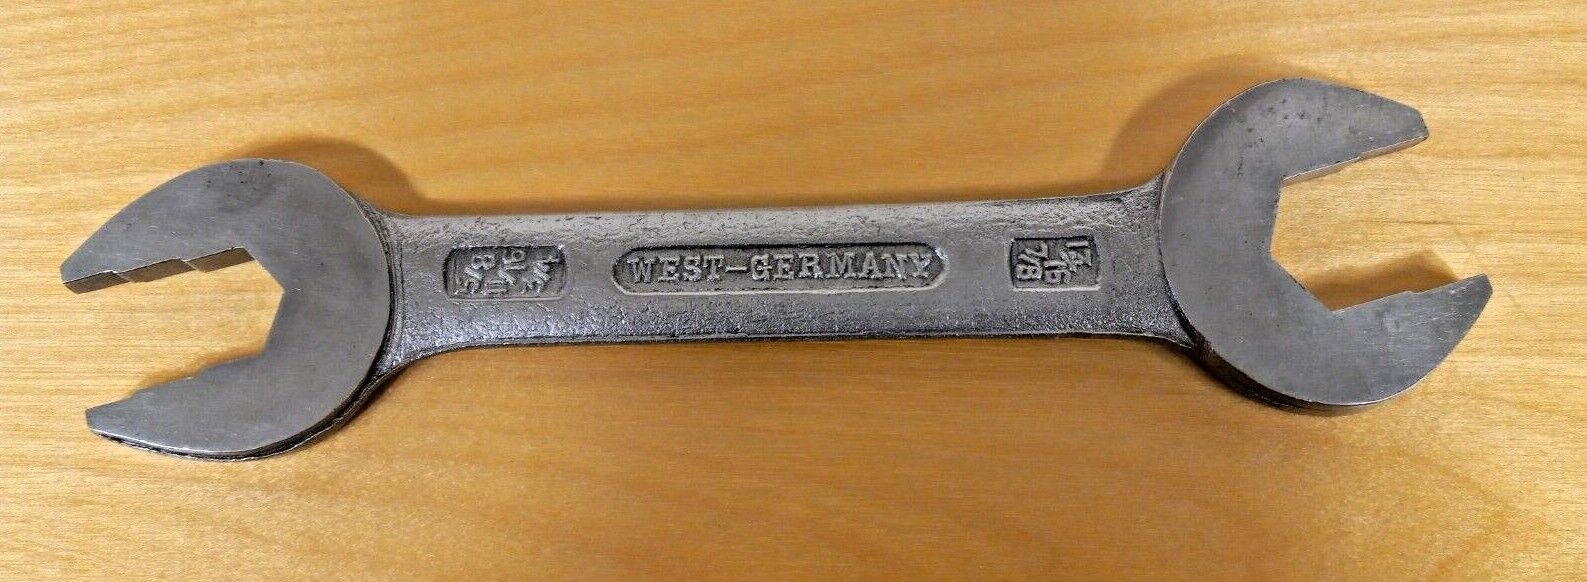 Unique Rare Vintage Ingo-Chrome Vanadium Combination Wrench Made in West Germany